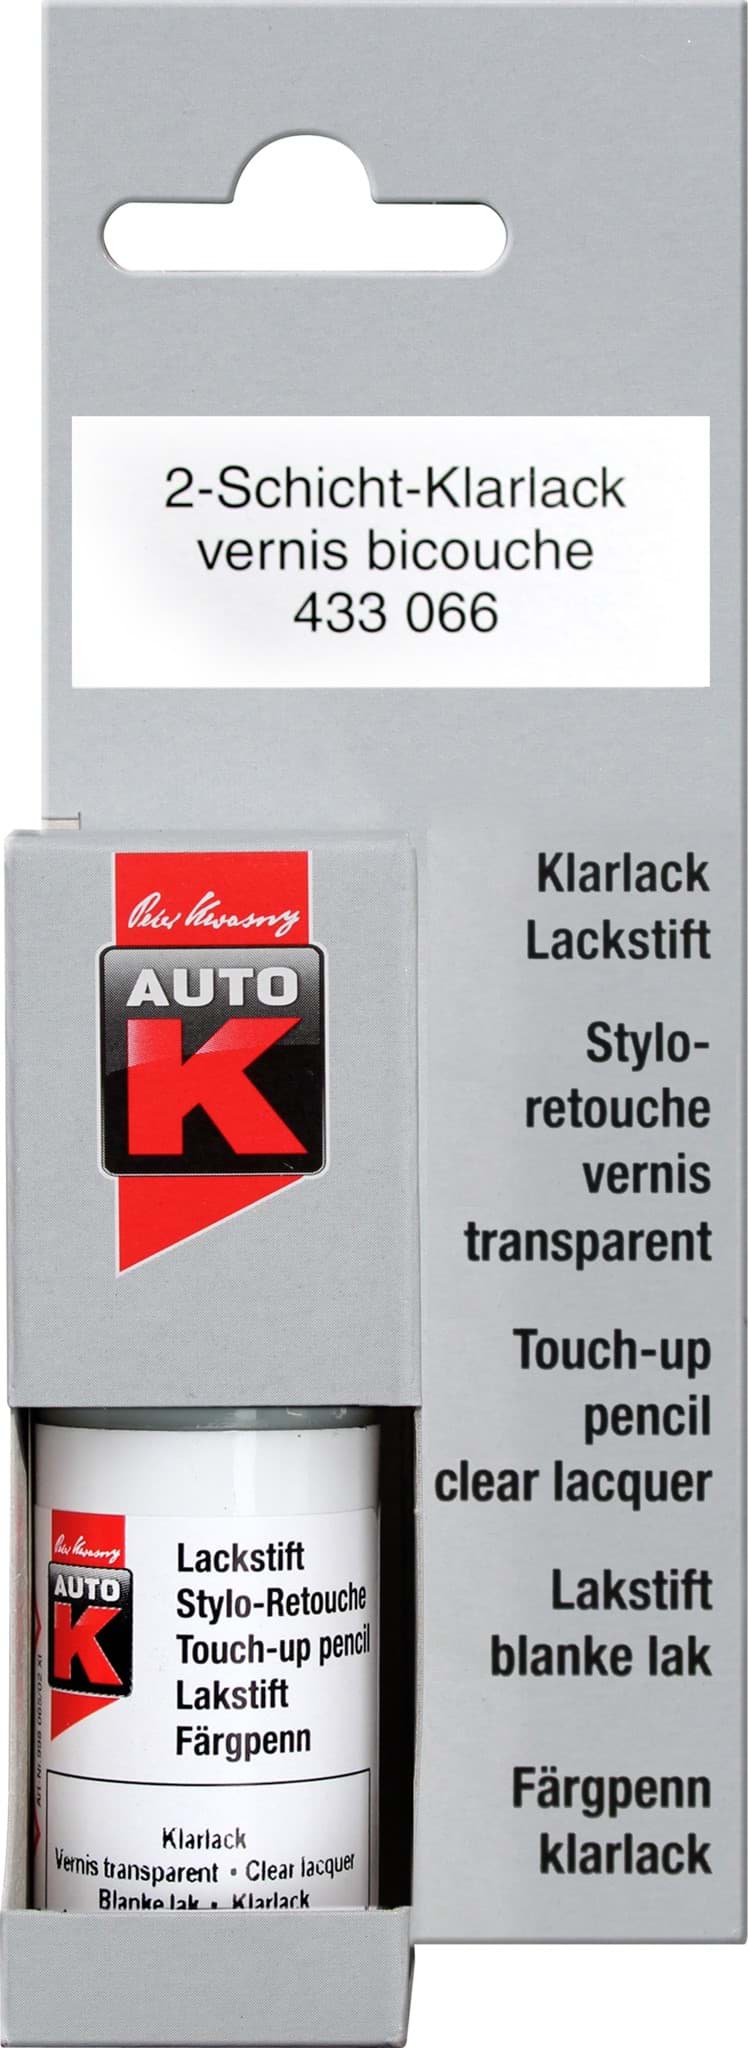 AutoK Lackstift Tupflack 2-Schicht-Klarlack 433066 resmi